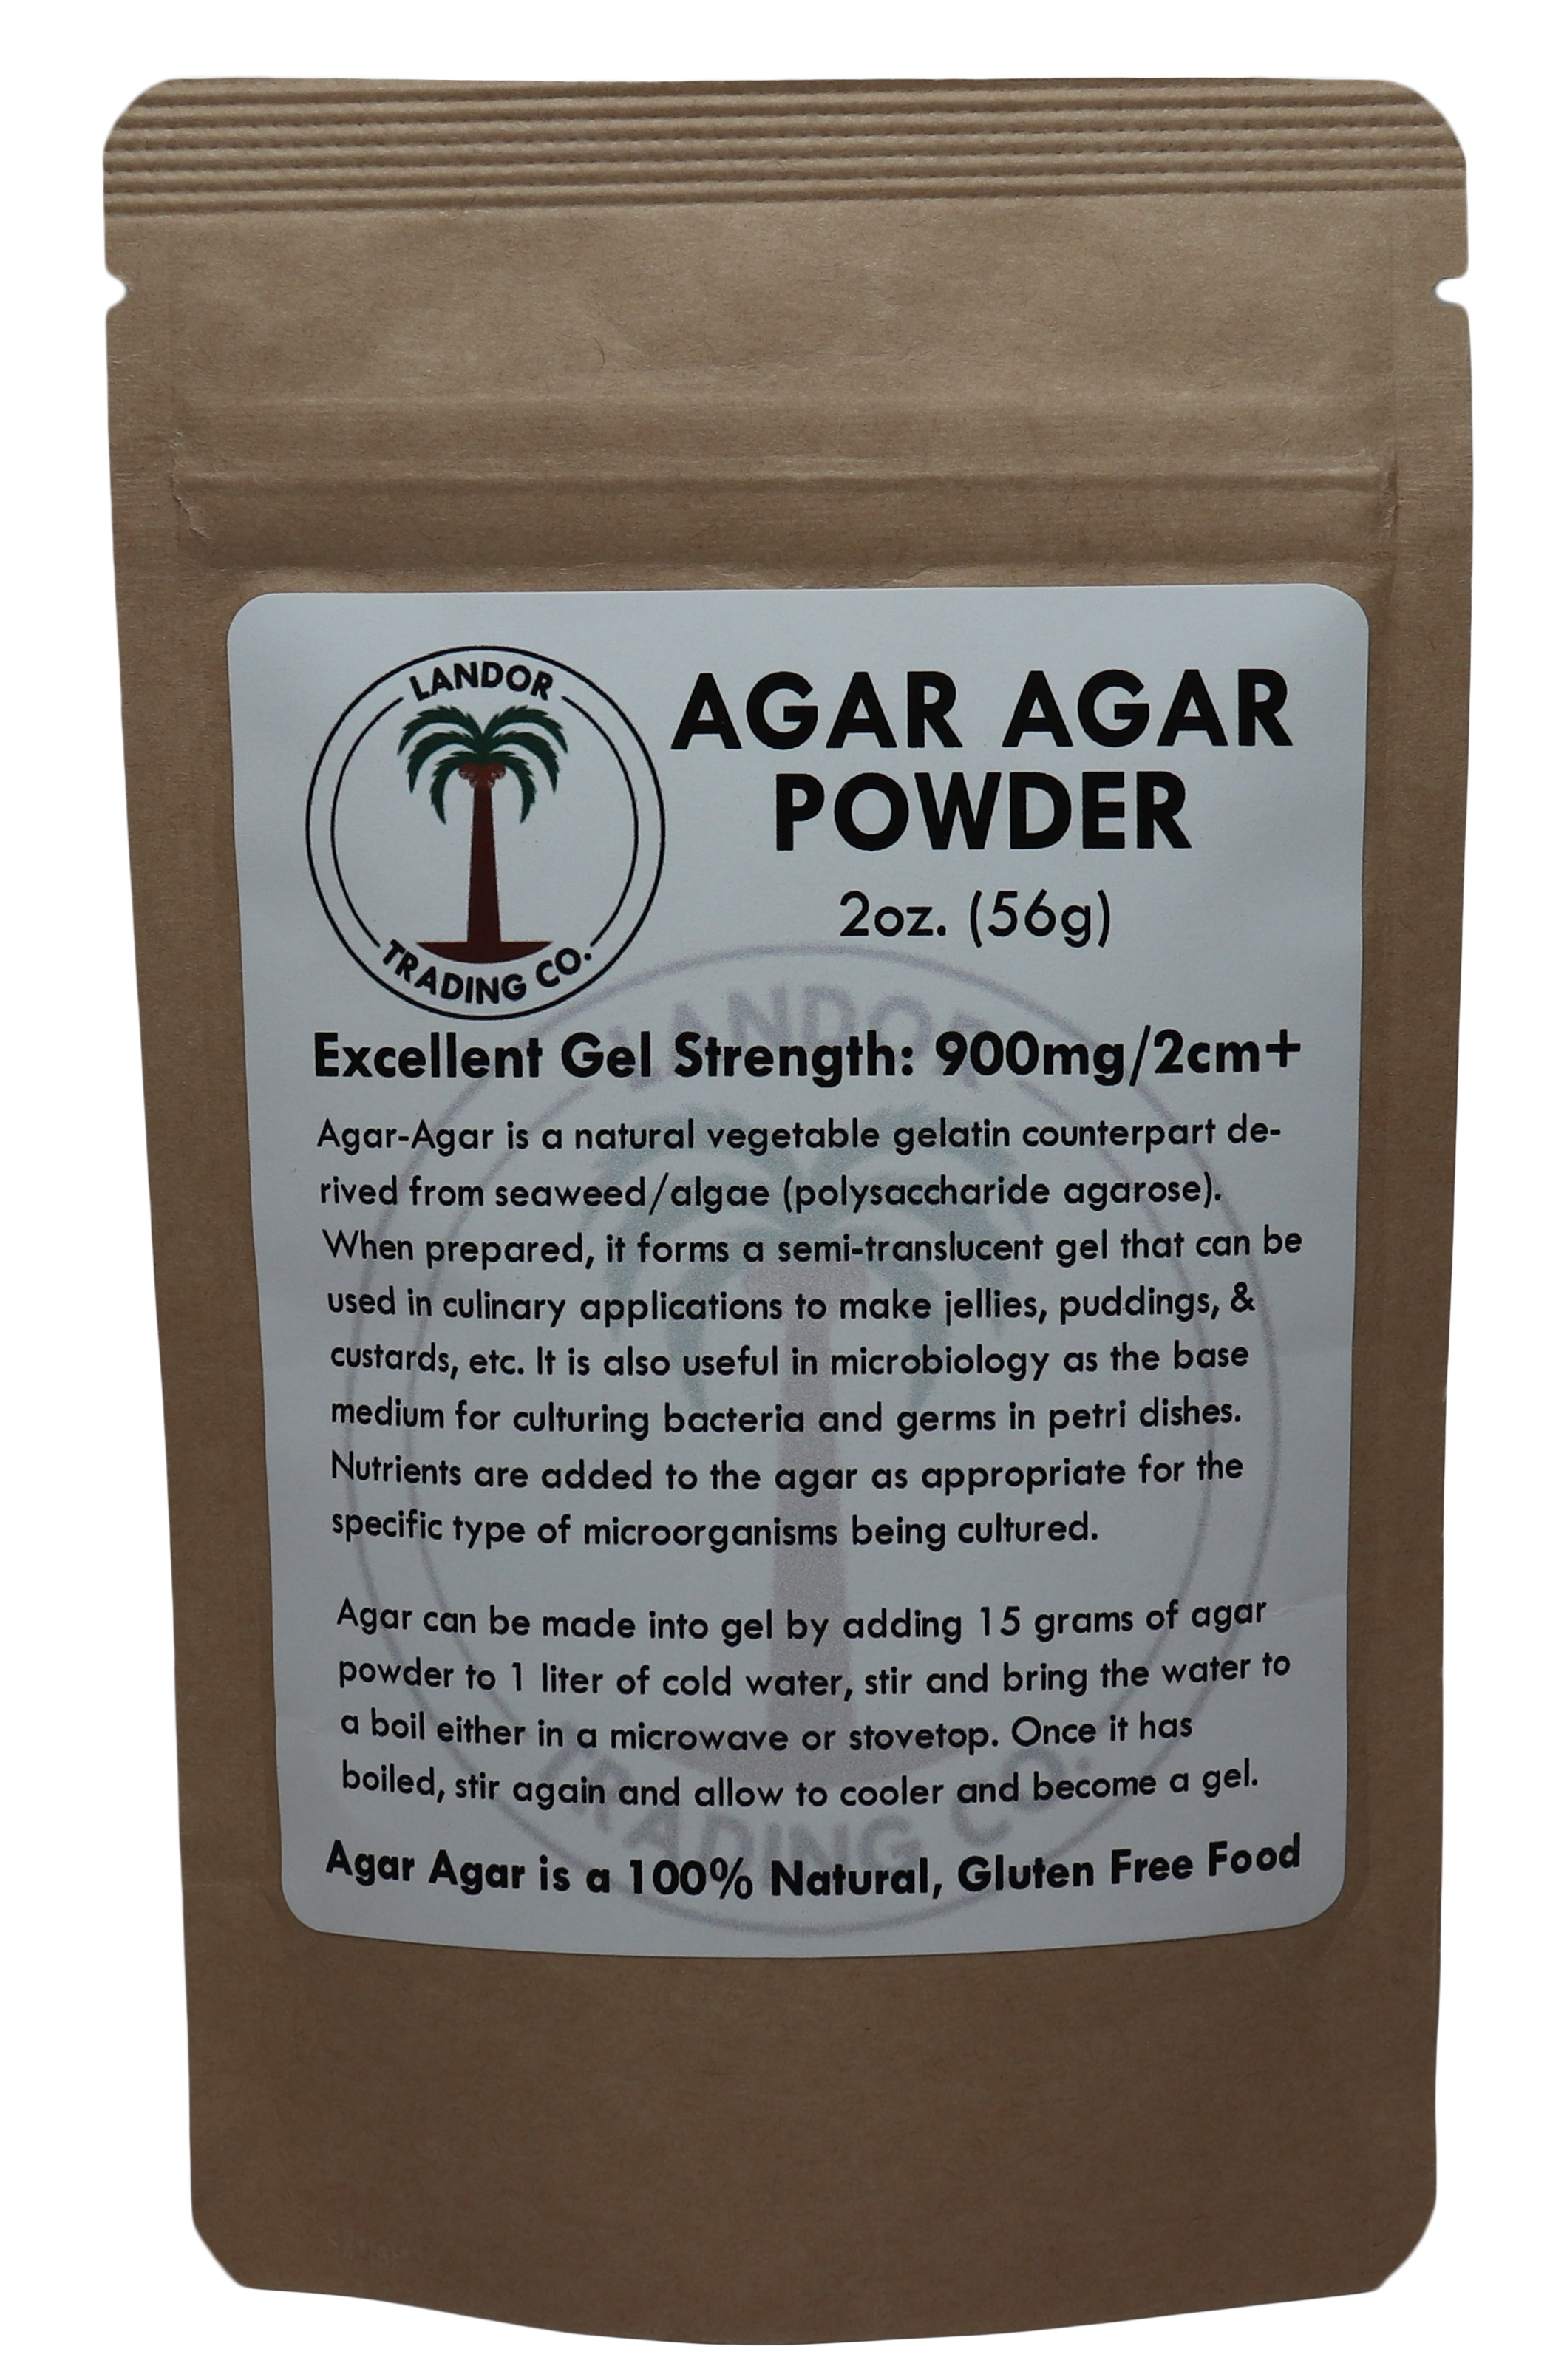 Agar Agar Powder 2oz - Excellent Gel Strength 900g/cm2 - image 1 of 9